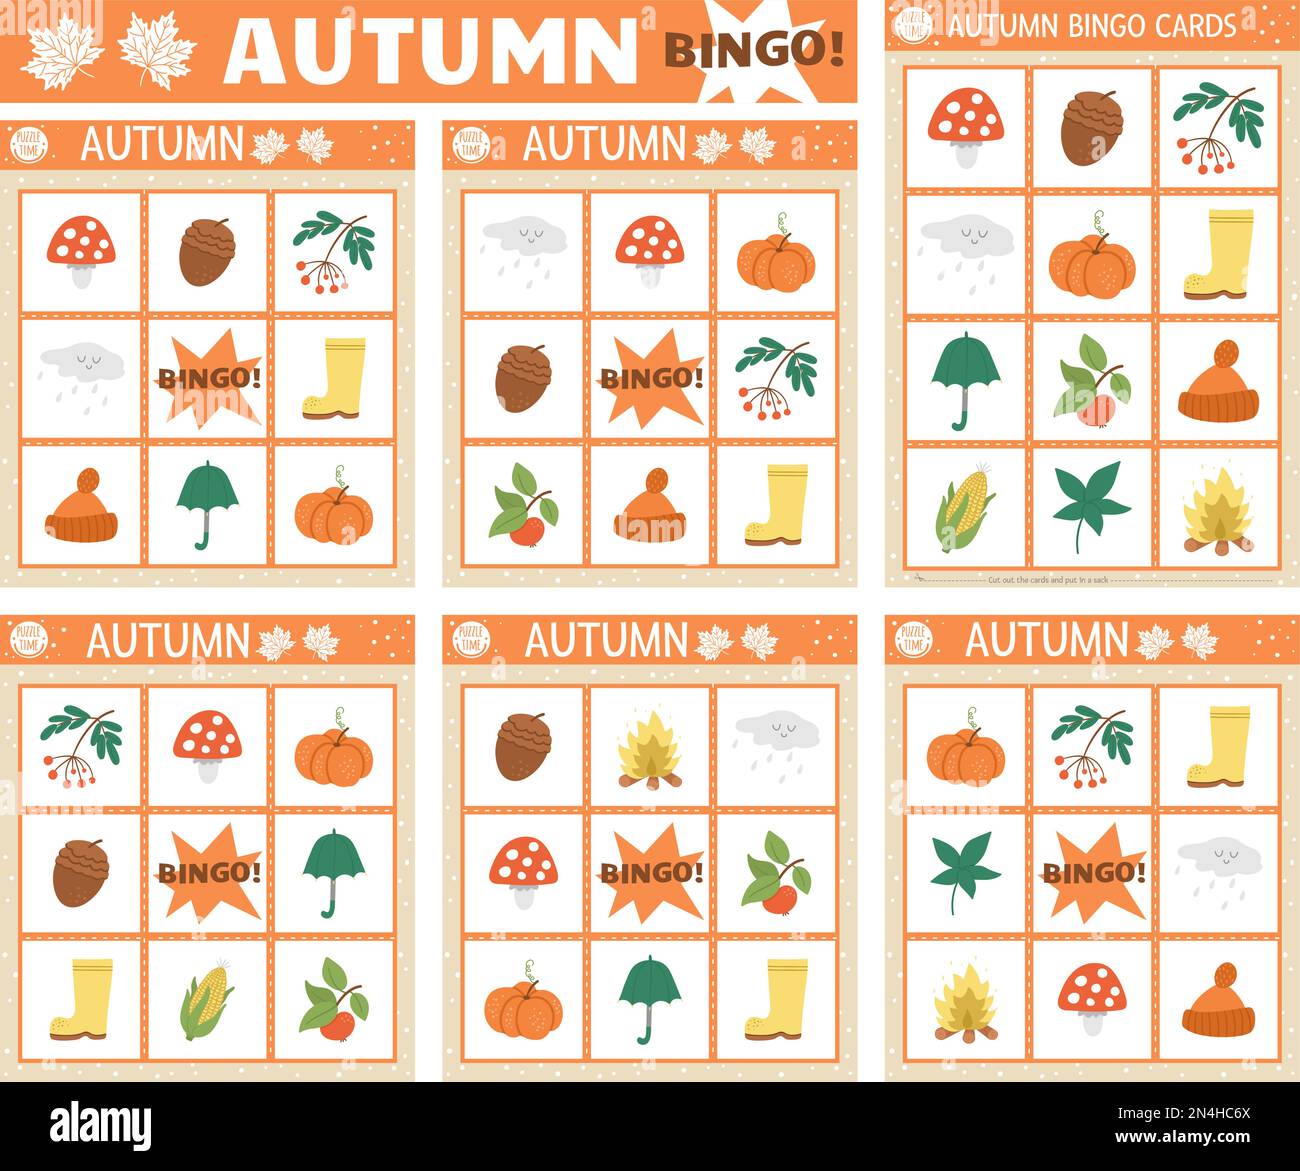 Vector Autumn bingo cards set. Fun family lotto board game with cute pumpkin, mushroom, umbrella for kids. Fall seasonal lottery activity. Simple educ Stock Vector